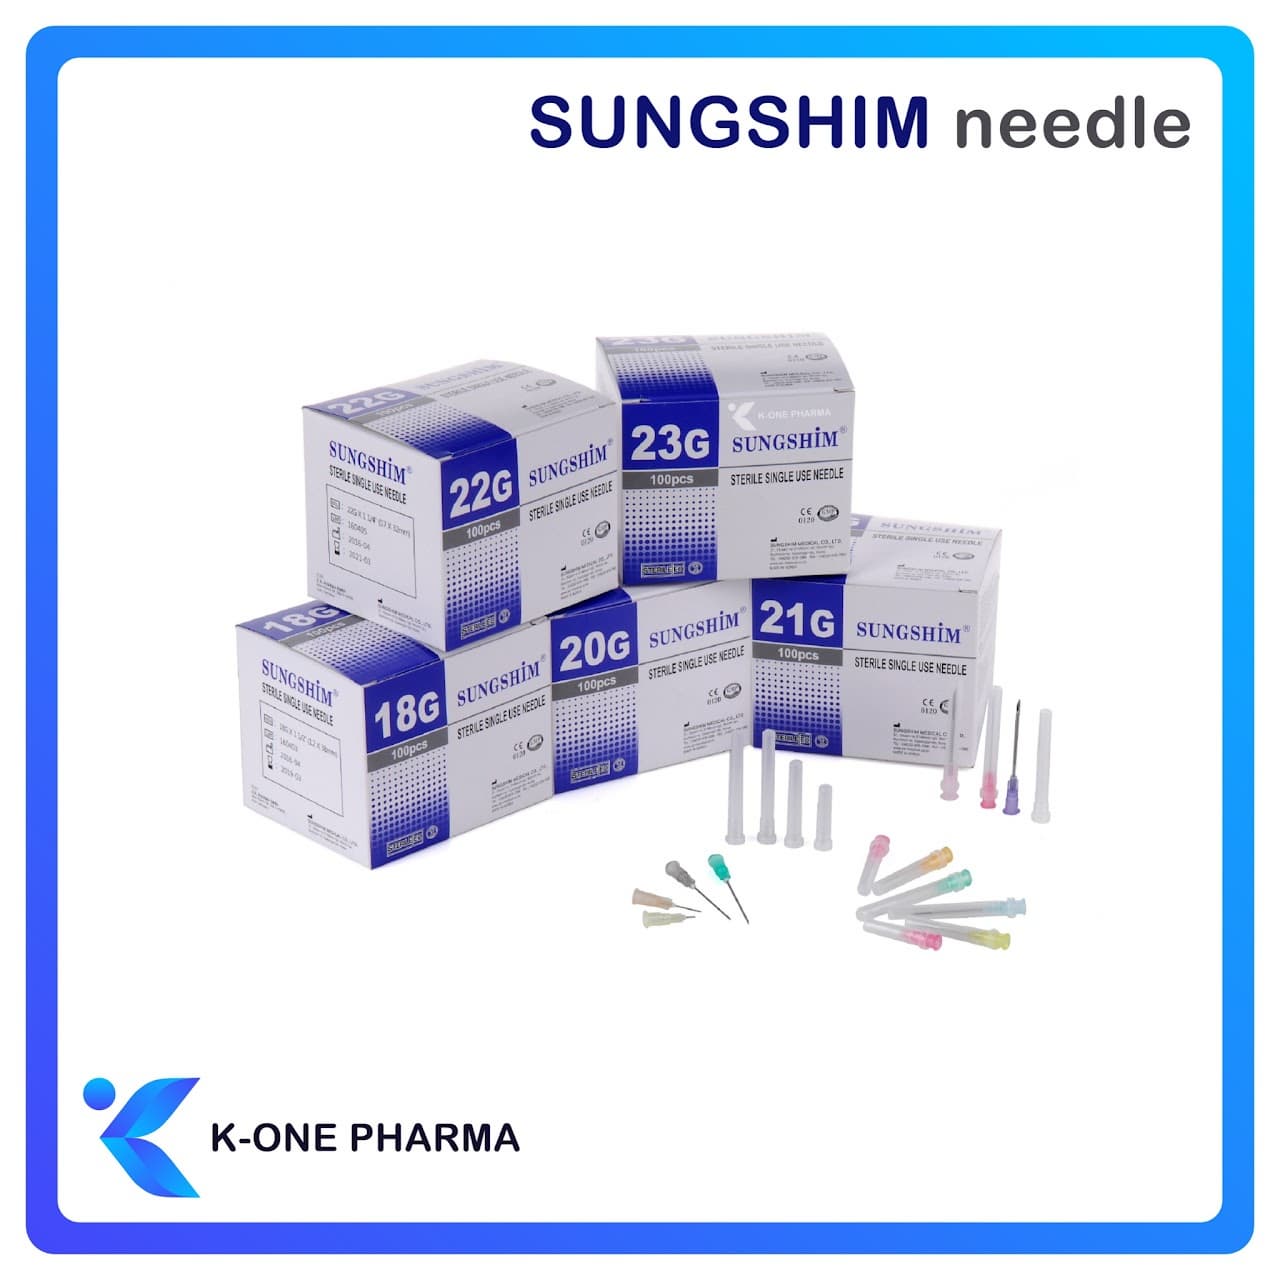 SUNGSHIM NEEDLE Latex Free Korea Product Insulin